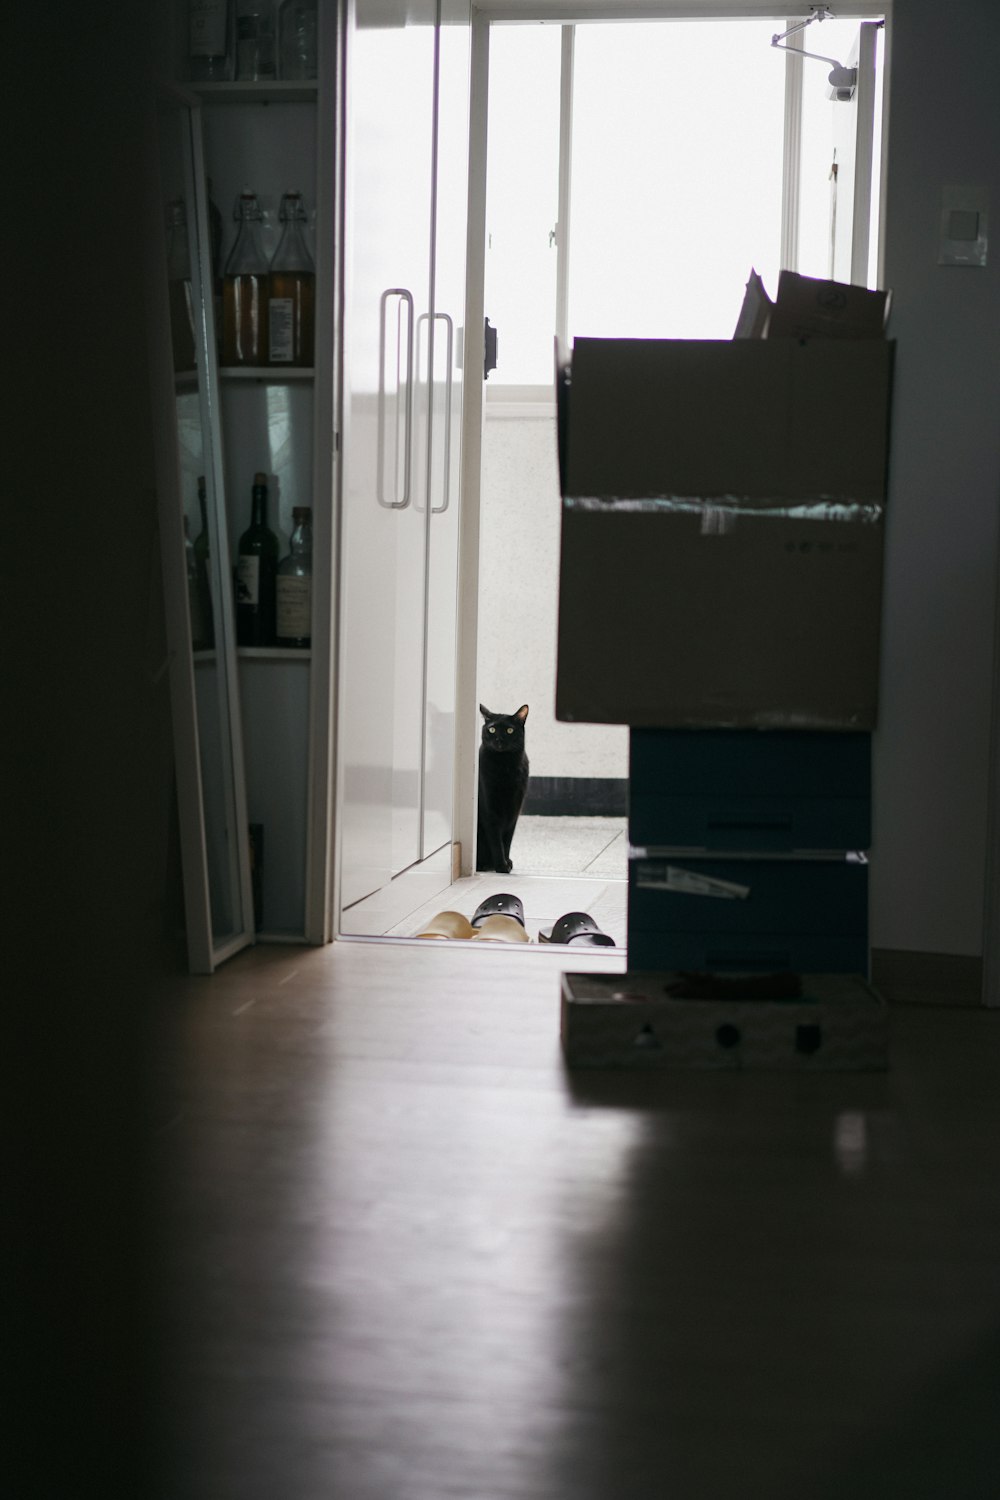 a cat sitting in a doorway